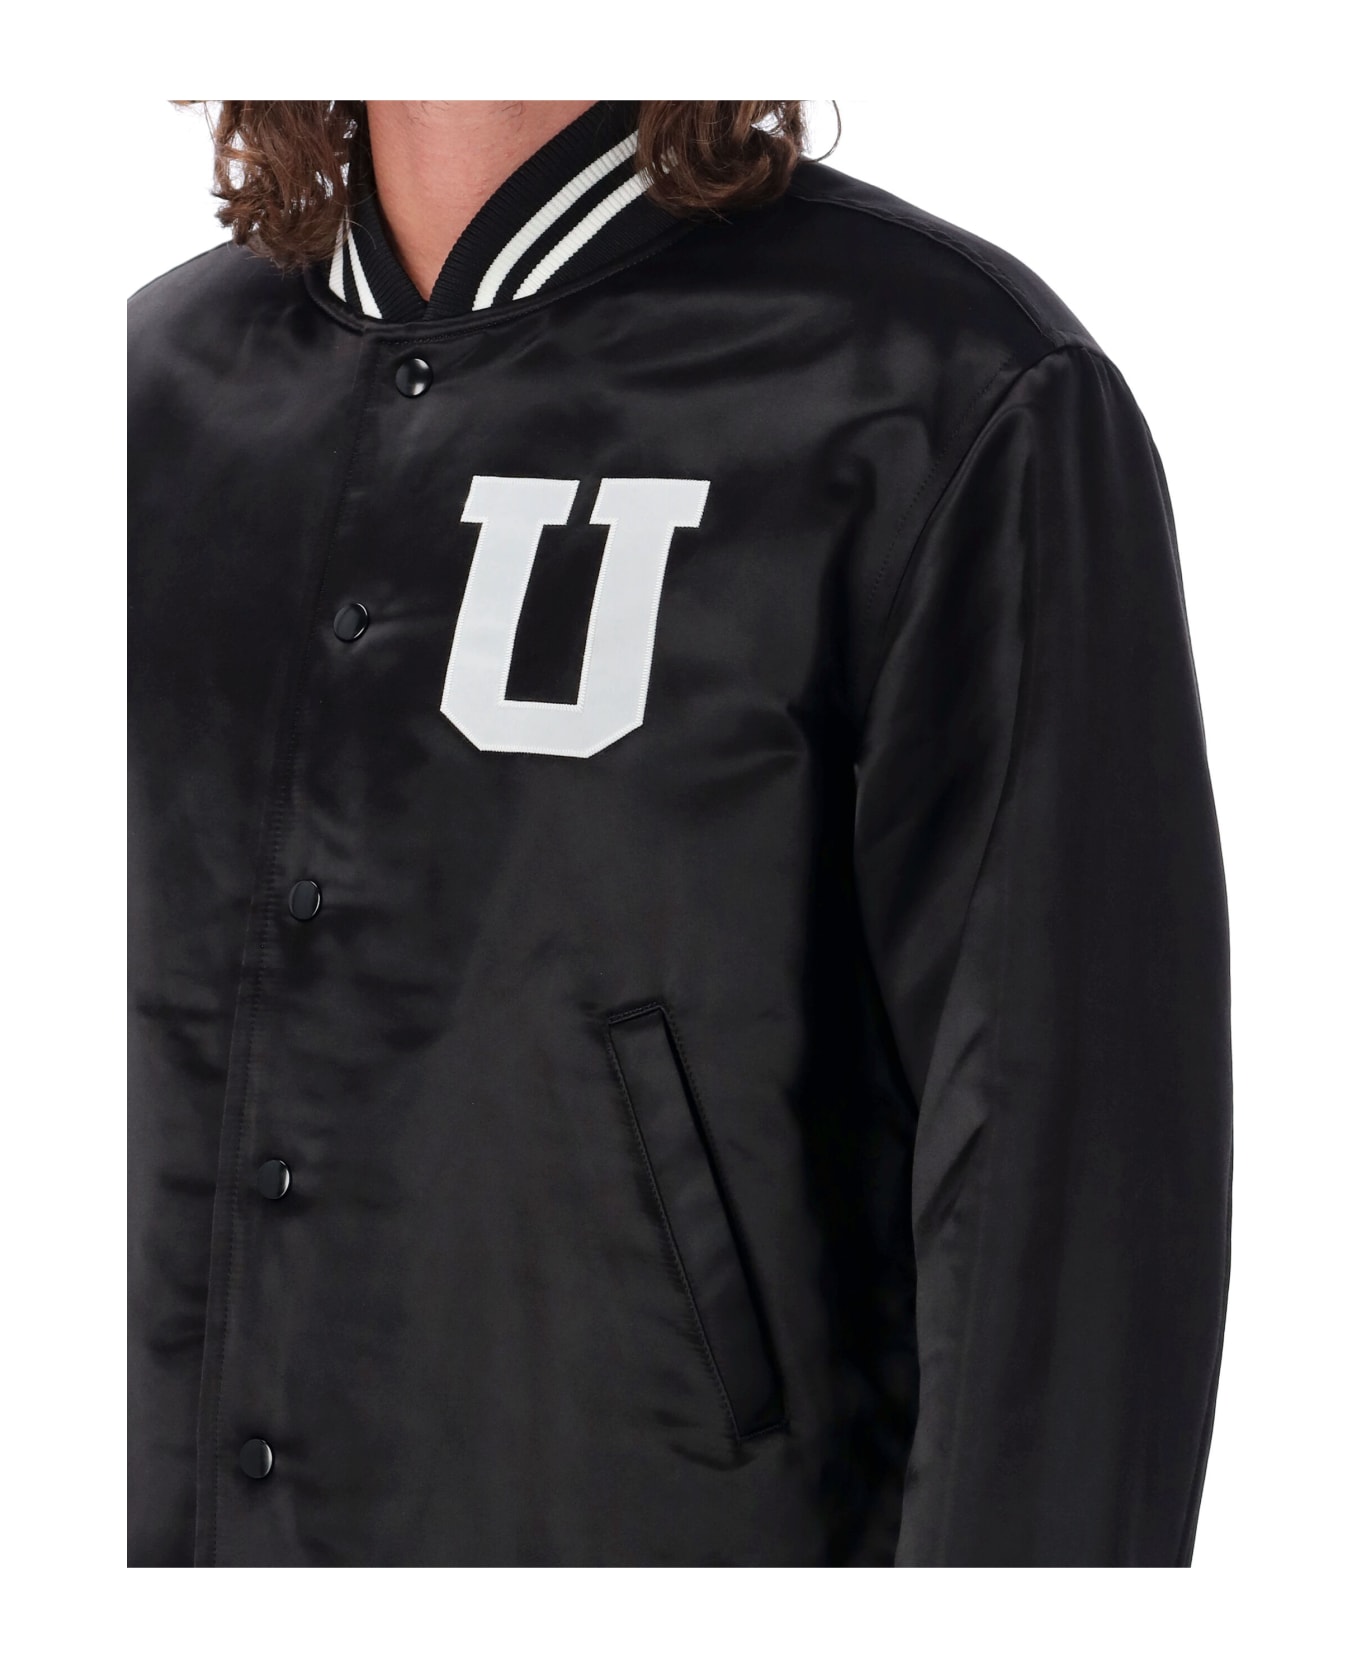 Undercover Jun Takahashi Varsity Jacket - BLACK